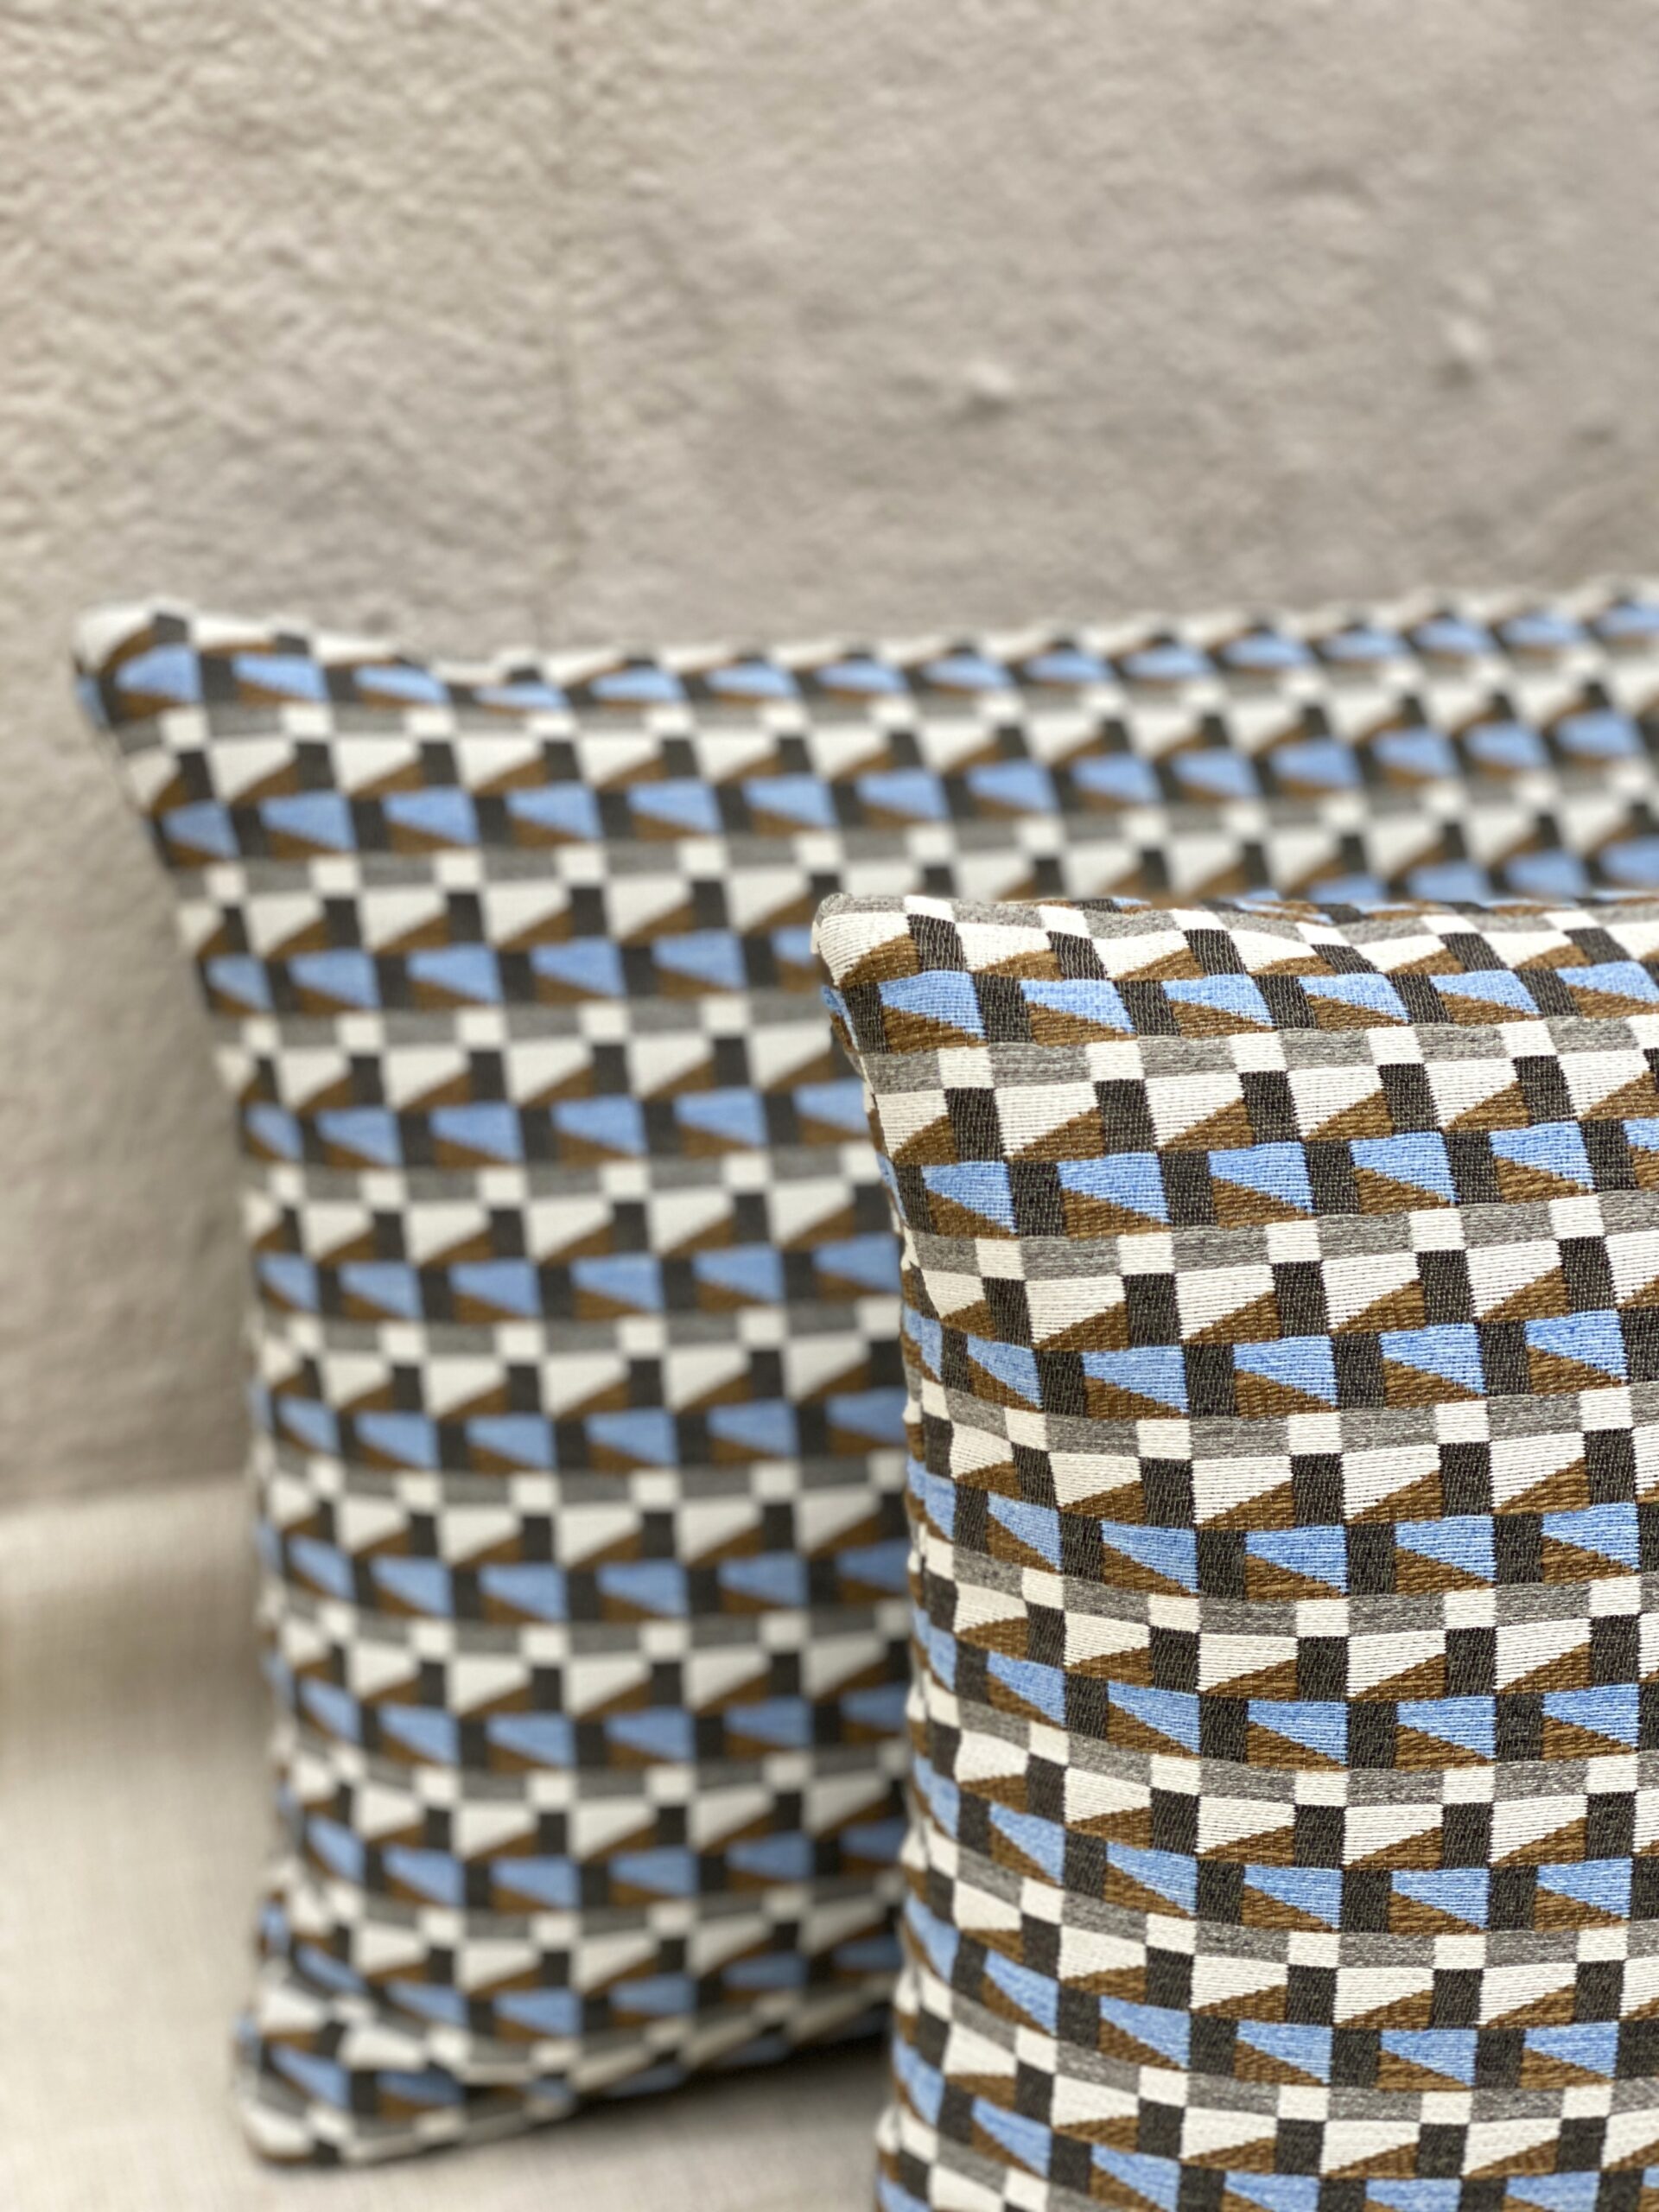 Knoll Textiles Vice Versa Pillows